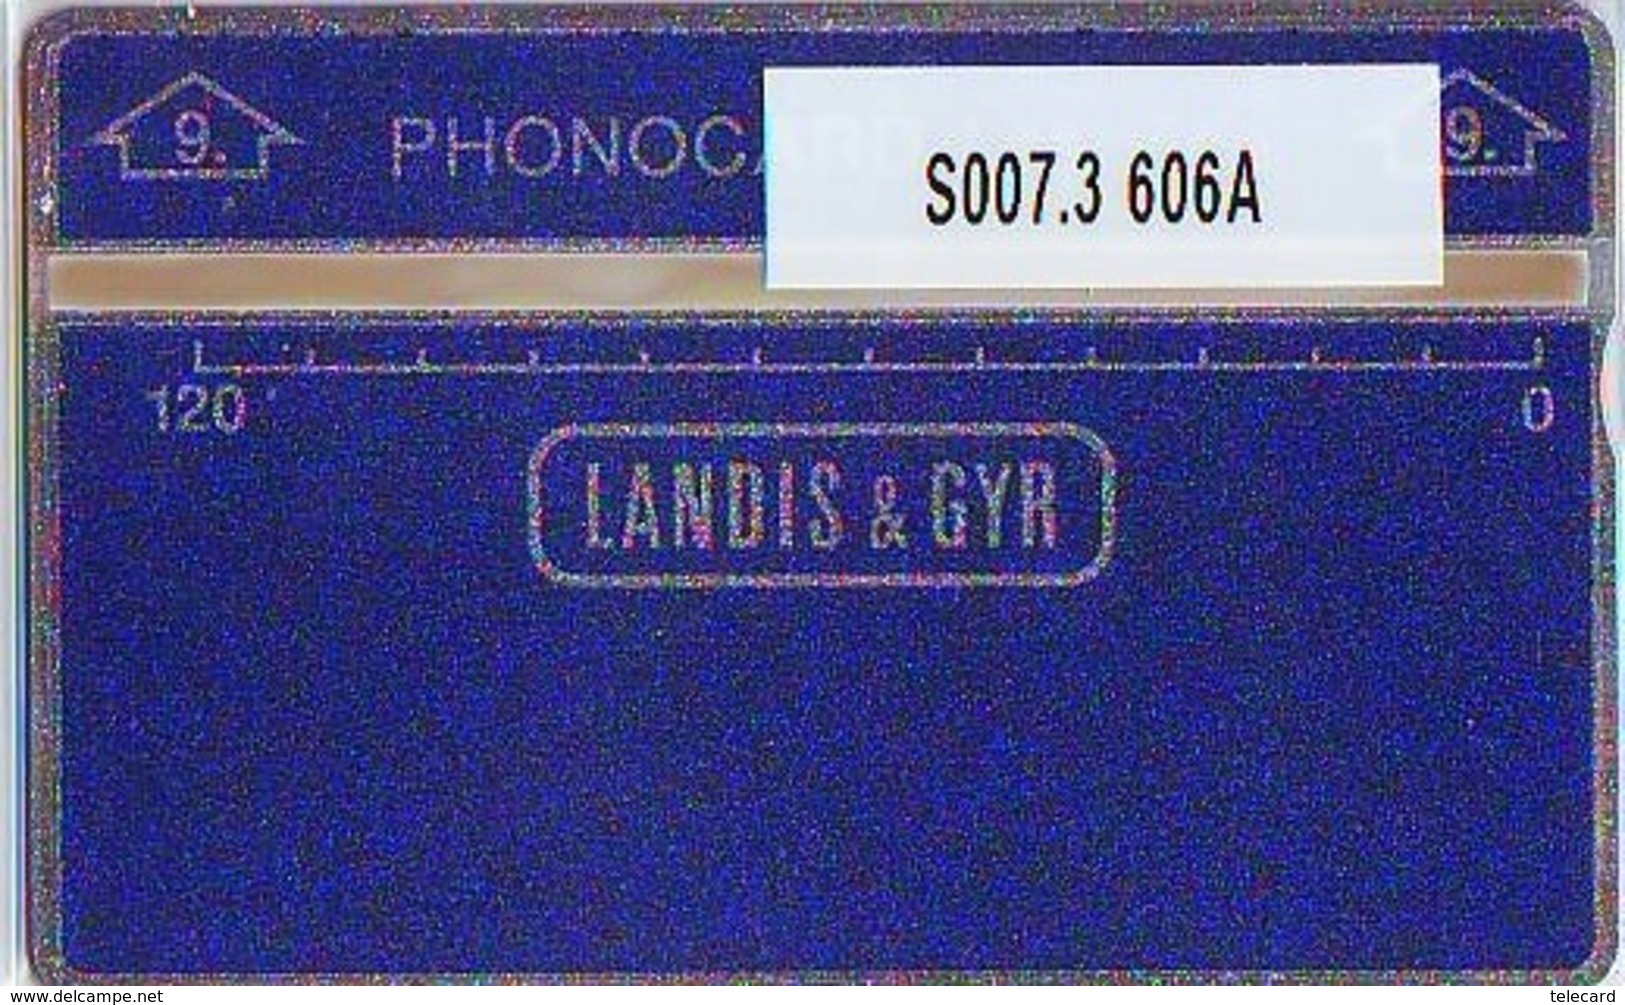 NEDERLAND LANDIS&GYR * SODECO * SERVICE CARD NR S007.3  606A  "9" ONGEBRUIKT *  MINT - [4] Test- U. Dienstkarten